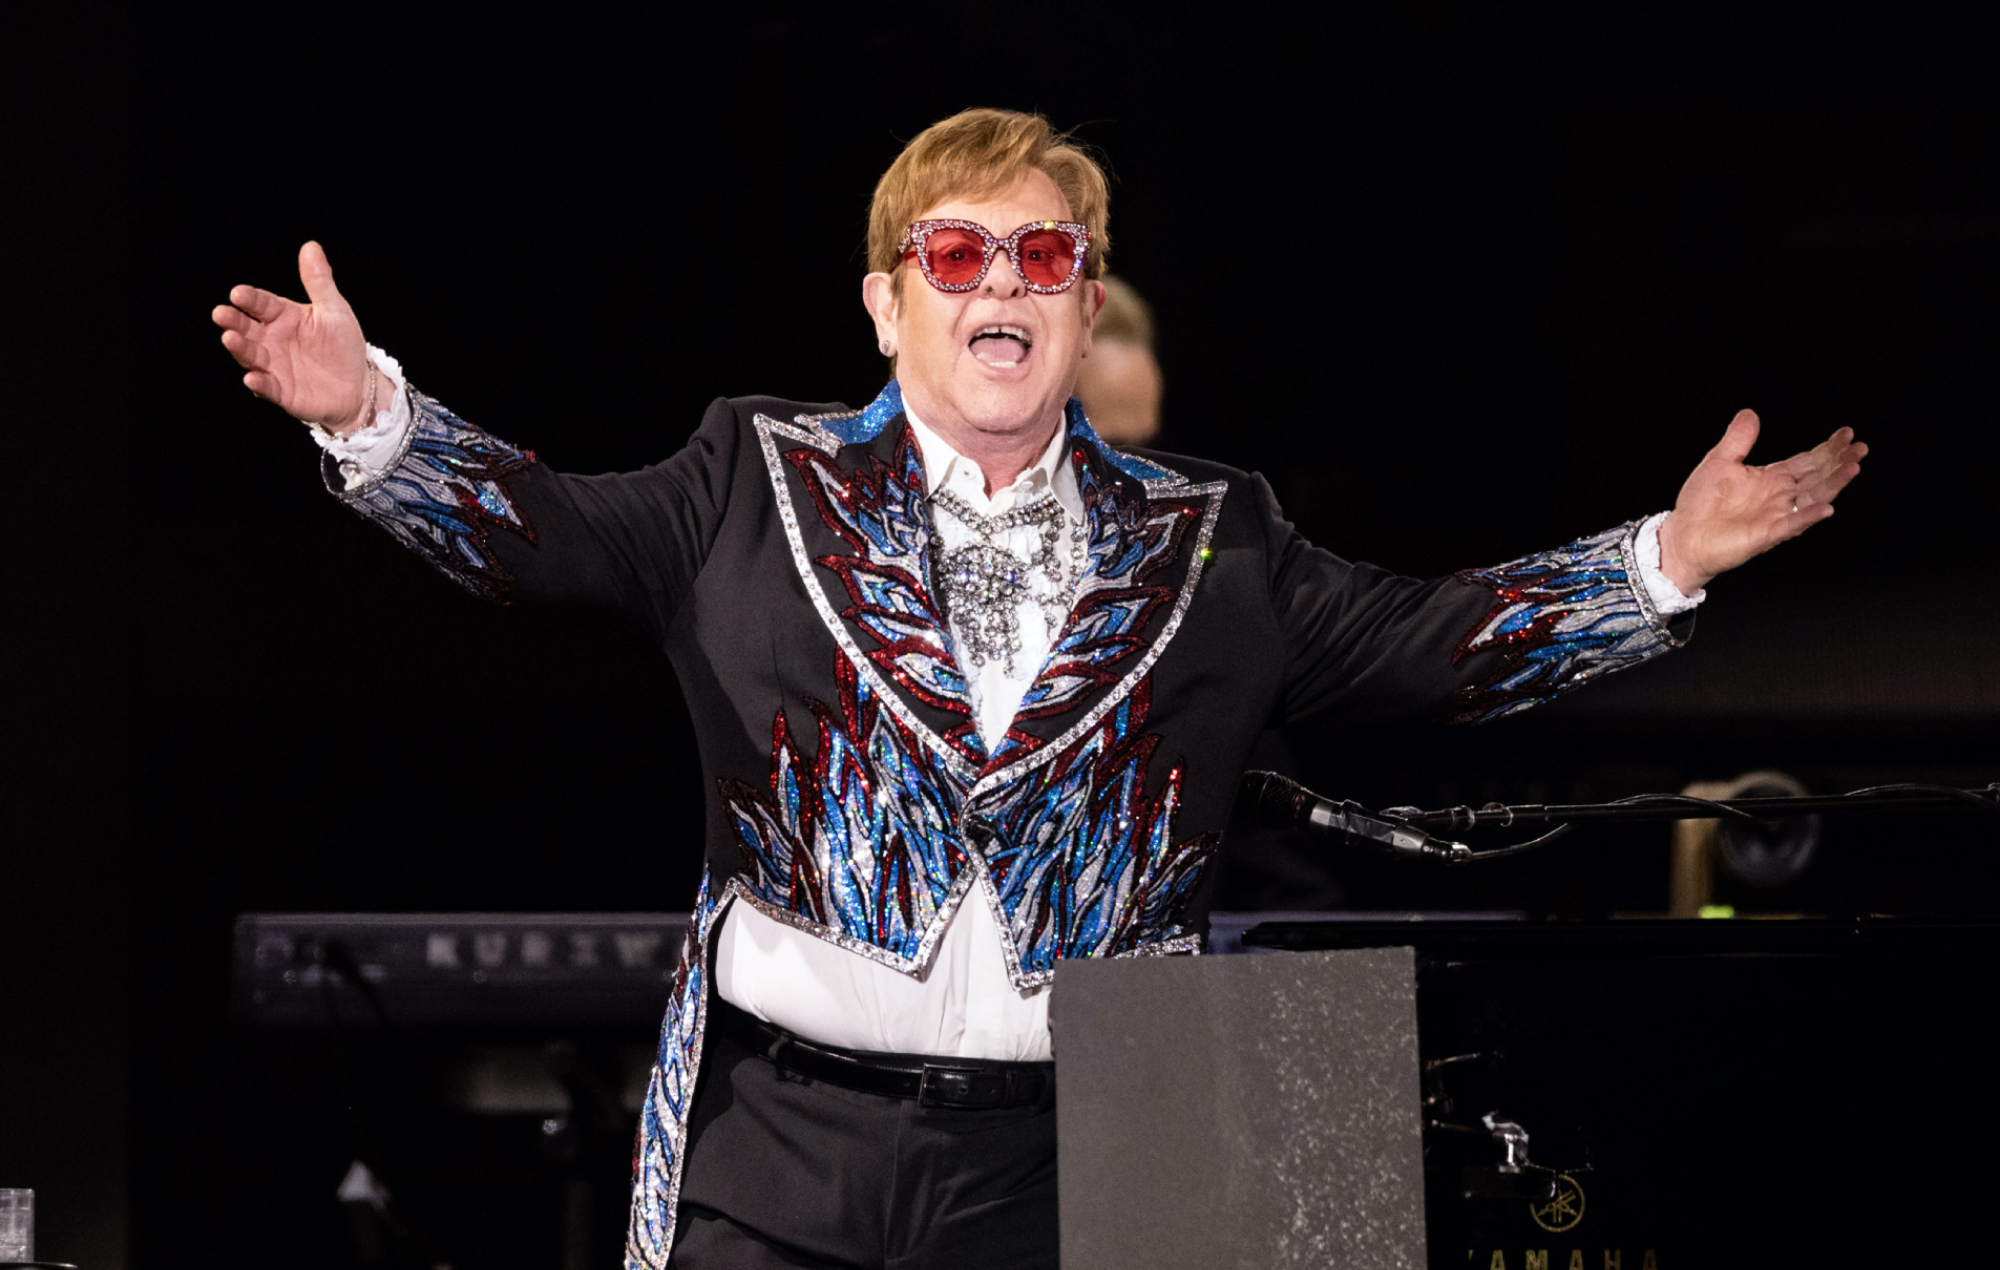 Elton John performing live on-stage